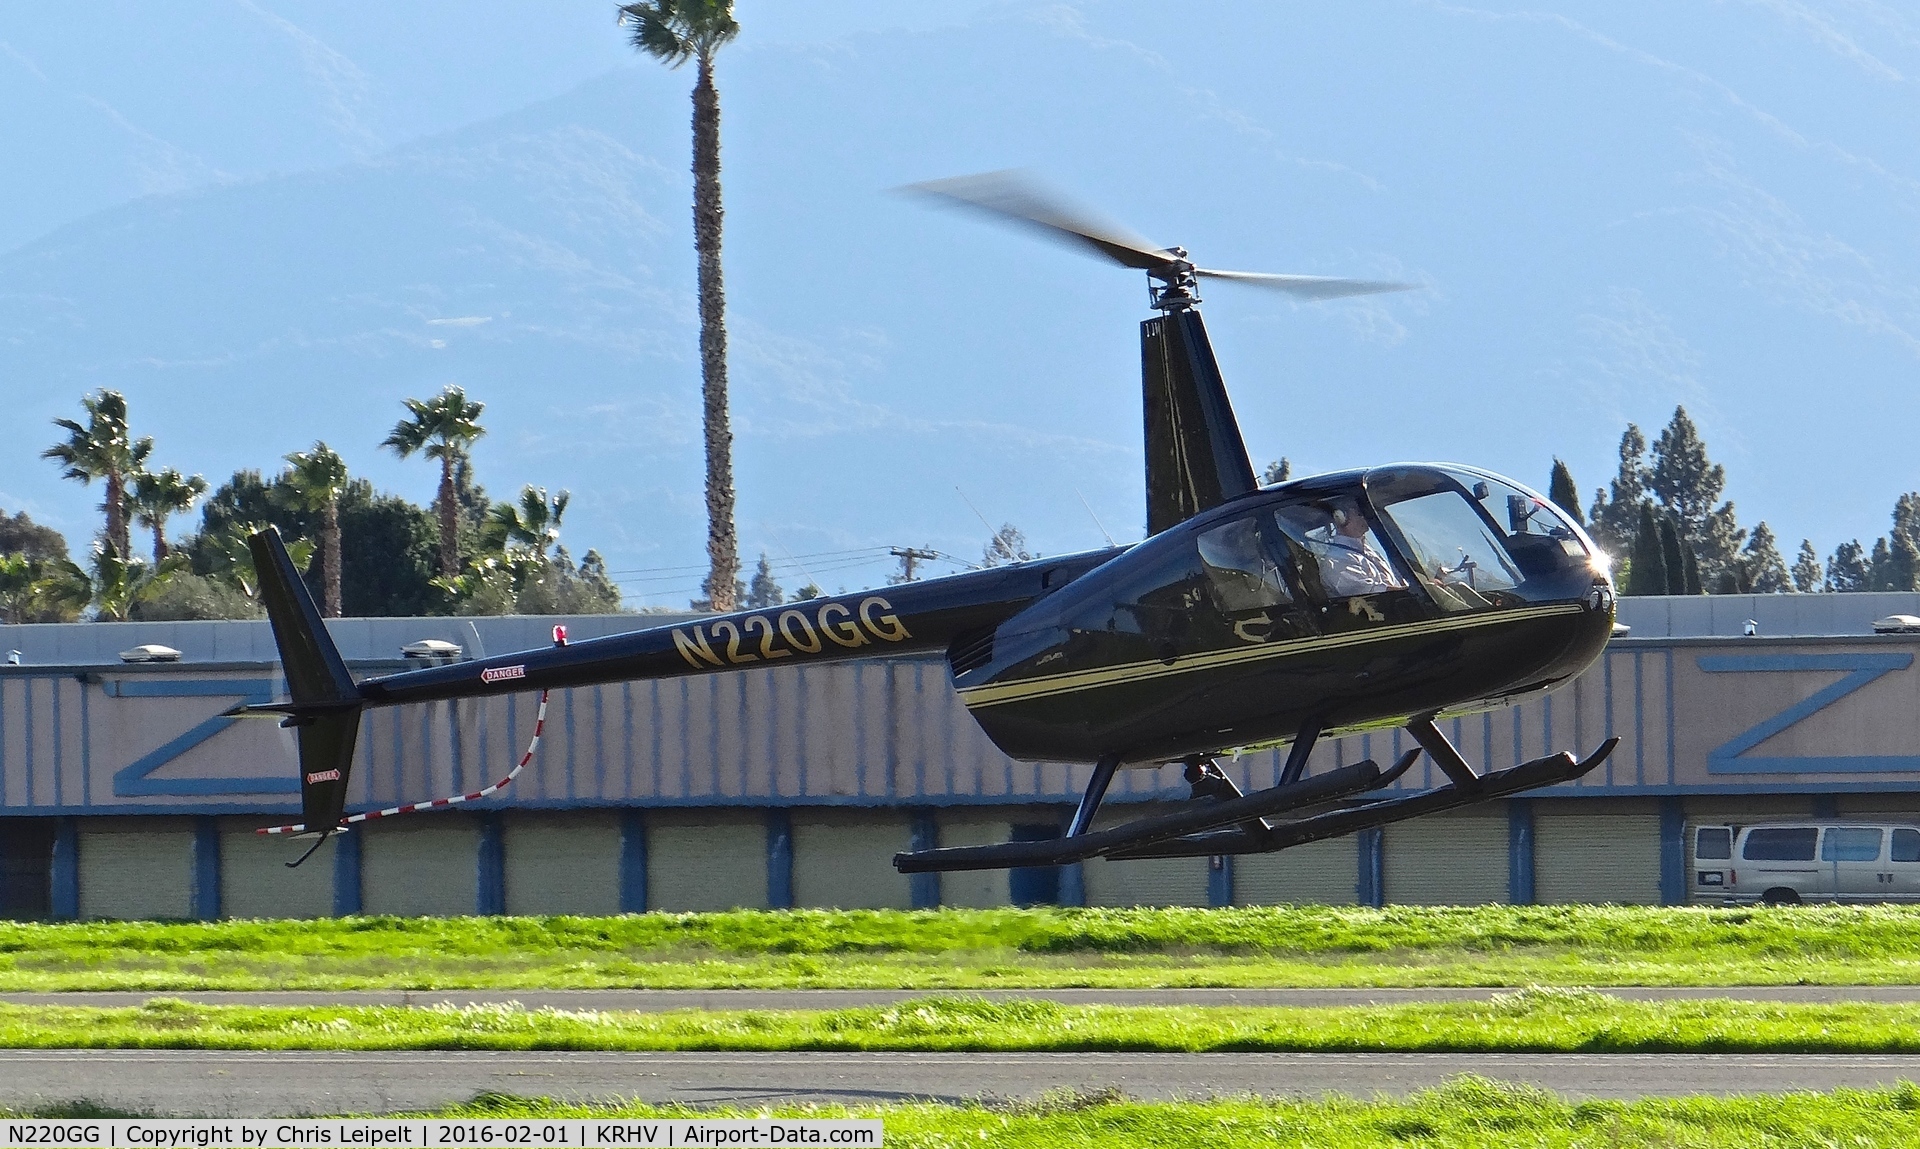 N220GG, 2009 Robinson R44 II C/N 12820, Locally-based 2009 Robinson R44 II landing runway 31R at Reid Hillview Airport, San Jose, CA.